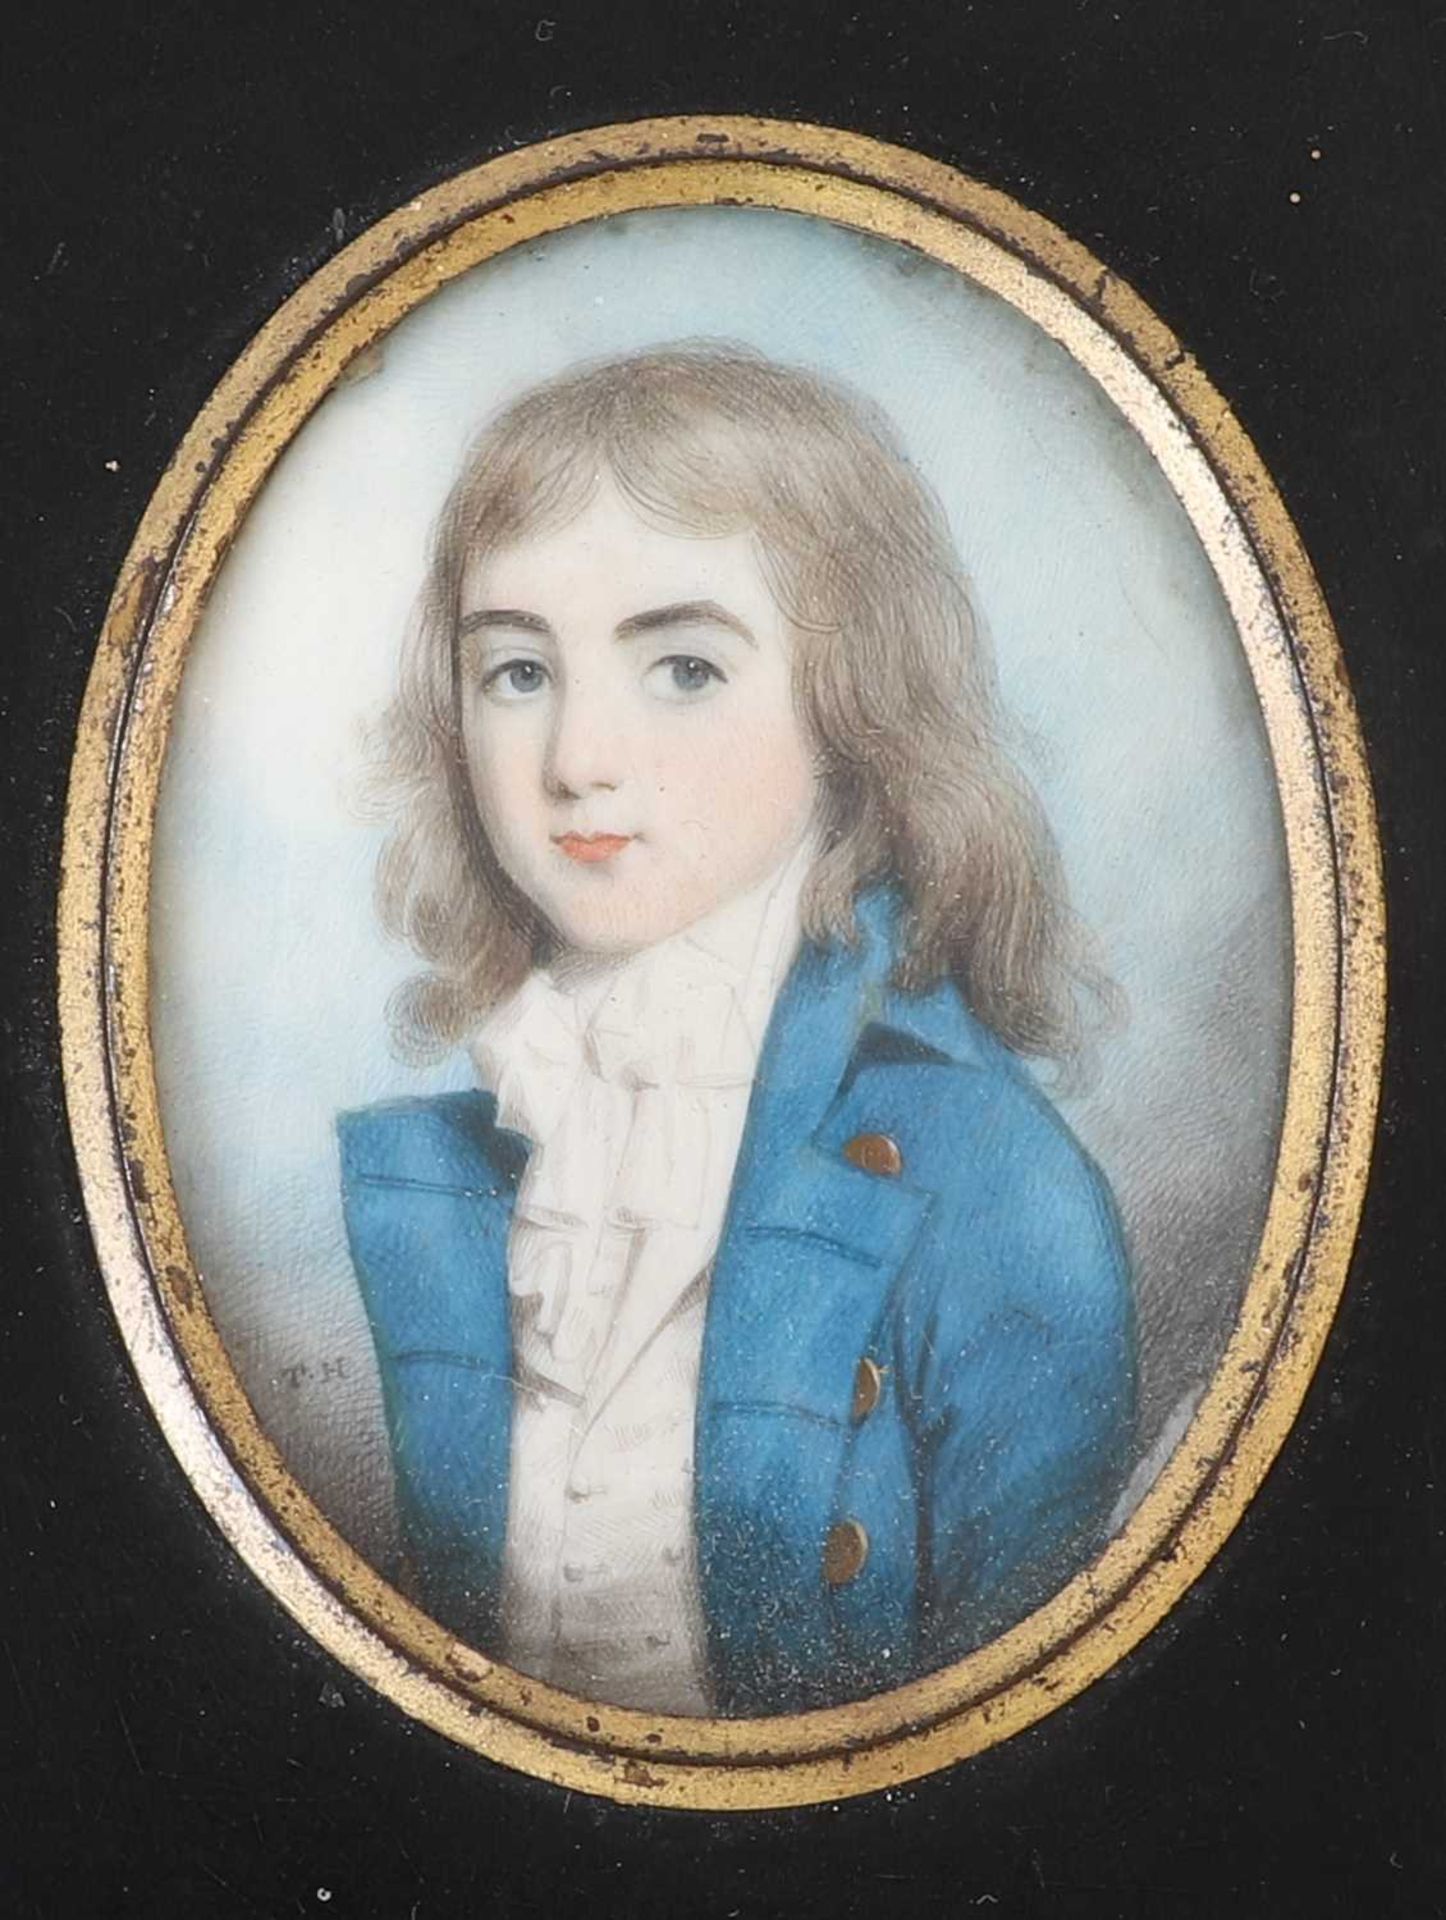 Thomas Hazelhurst (c.1740-c.1821)